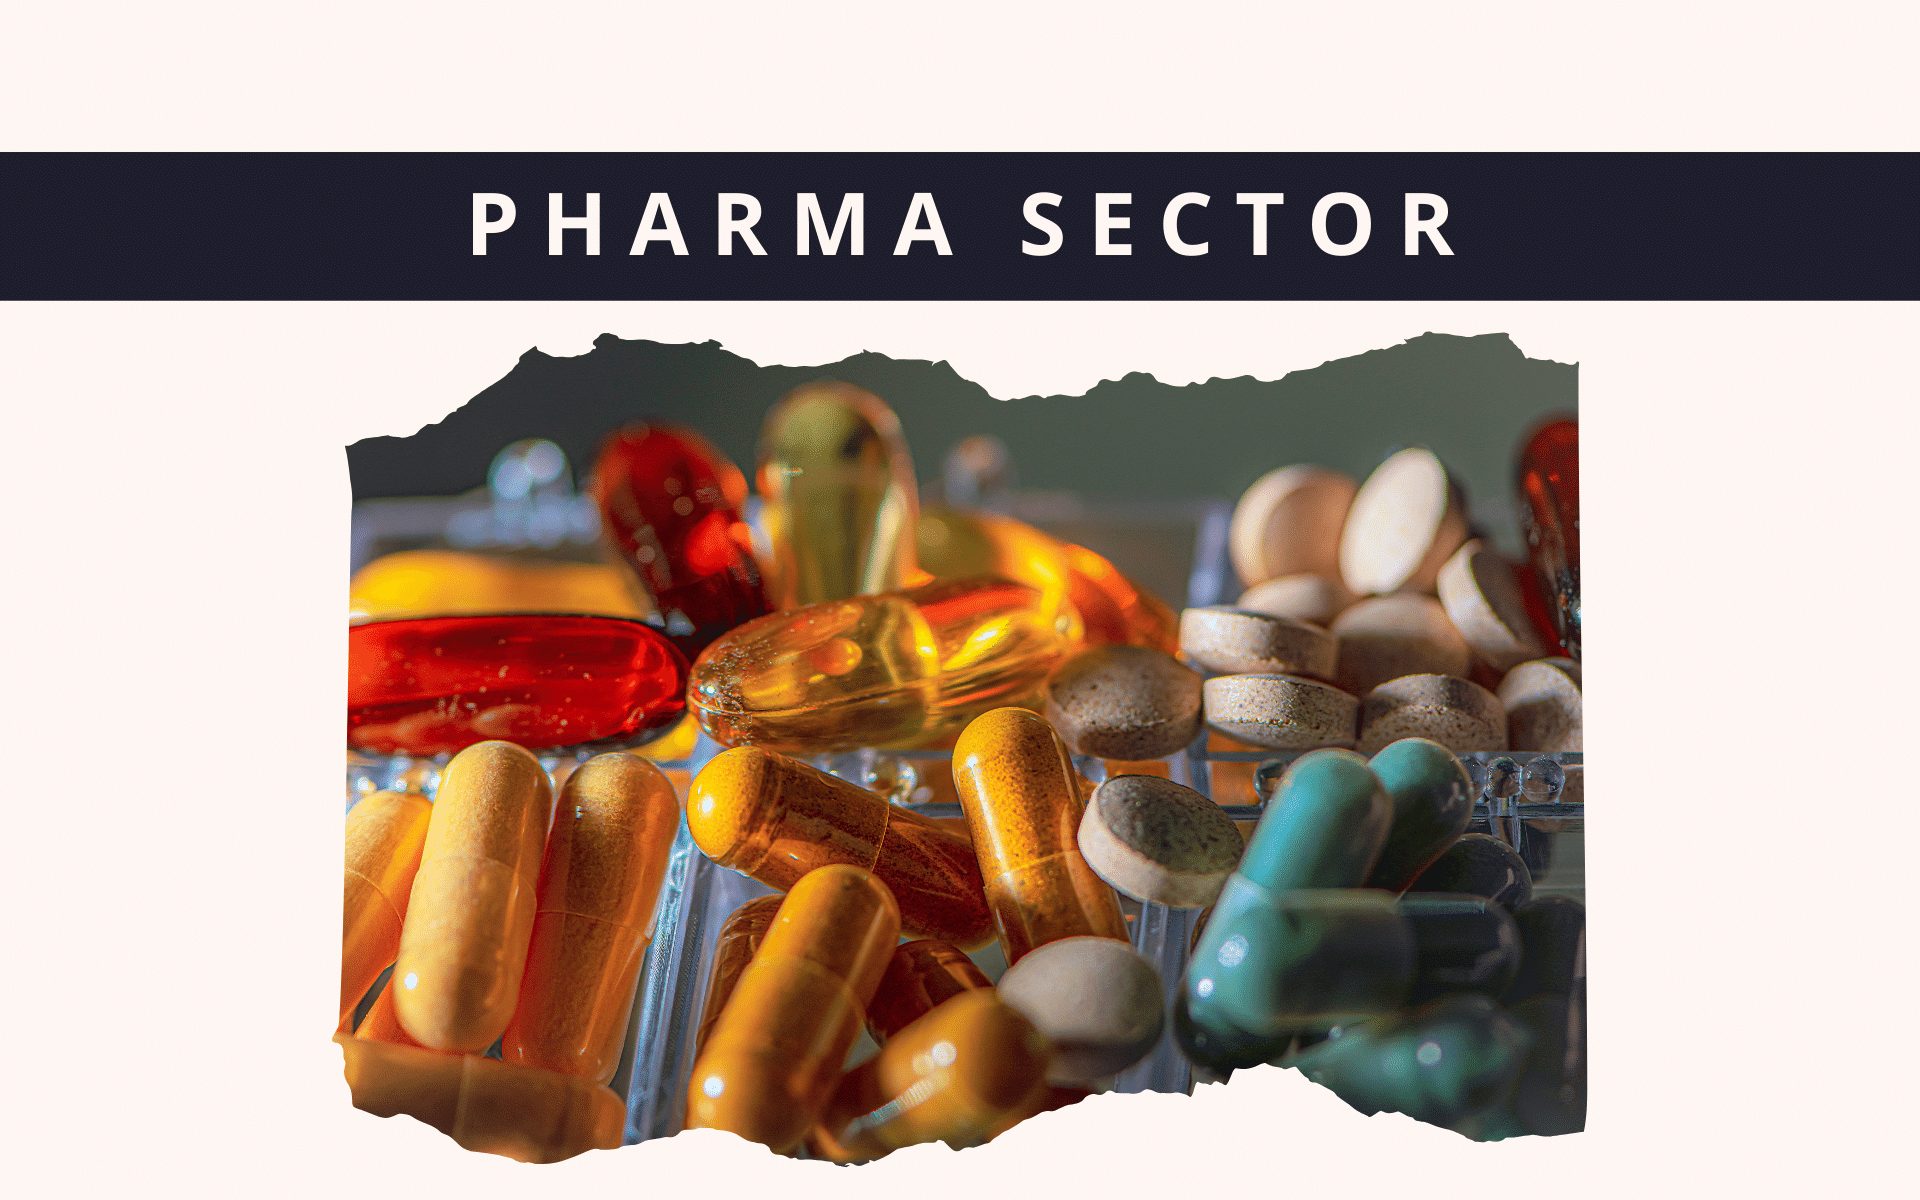 Pharma sector news